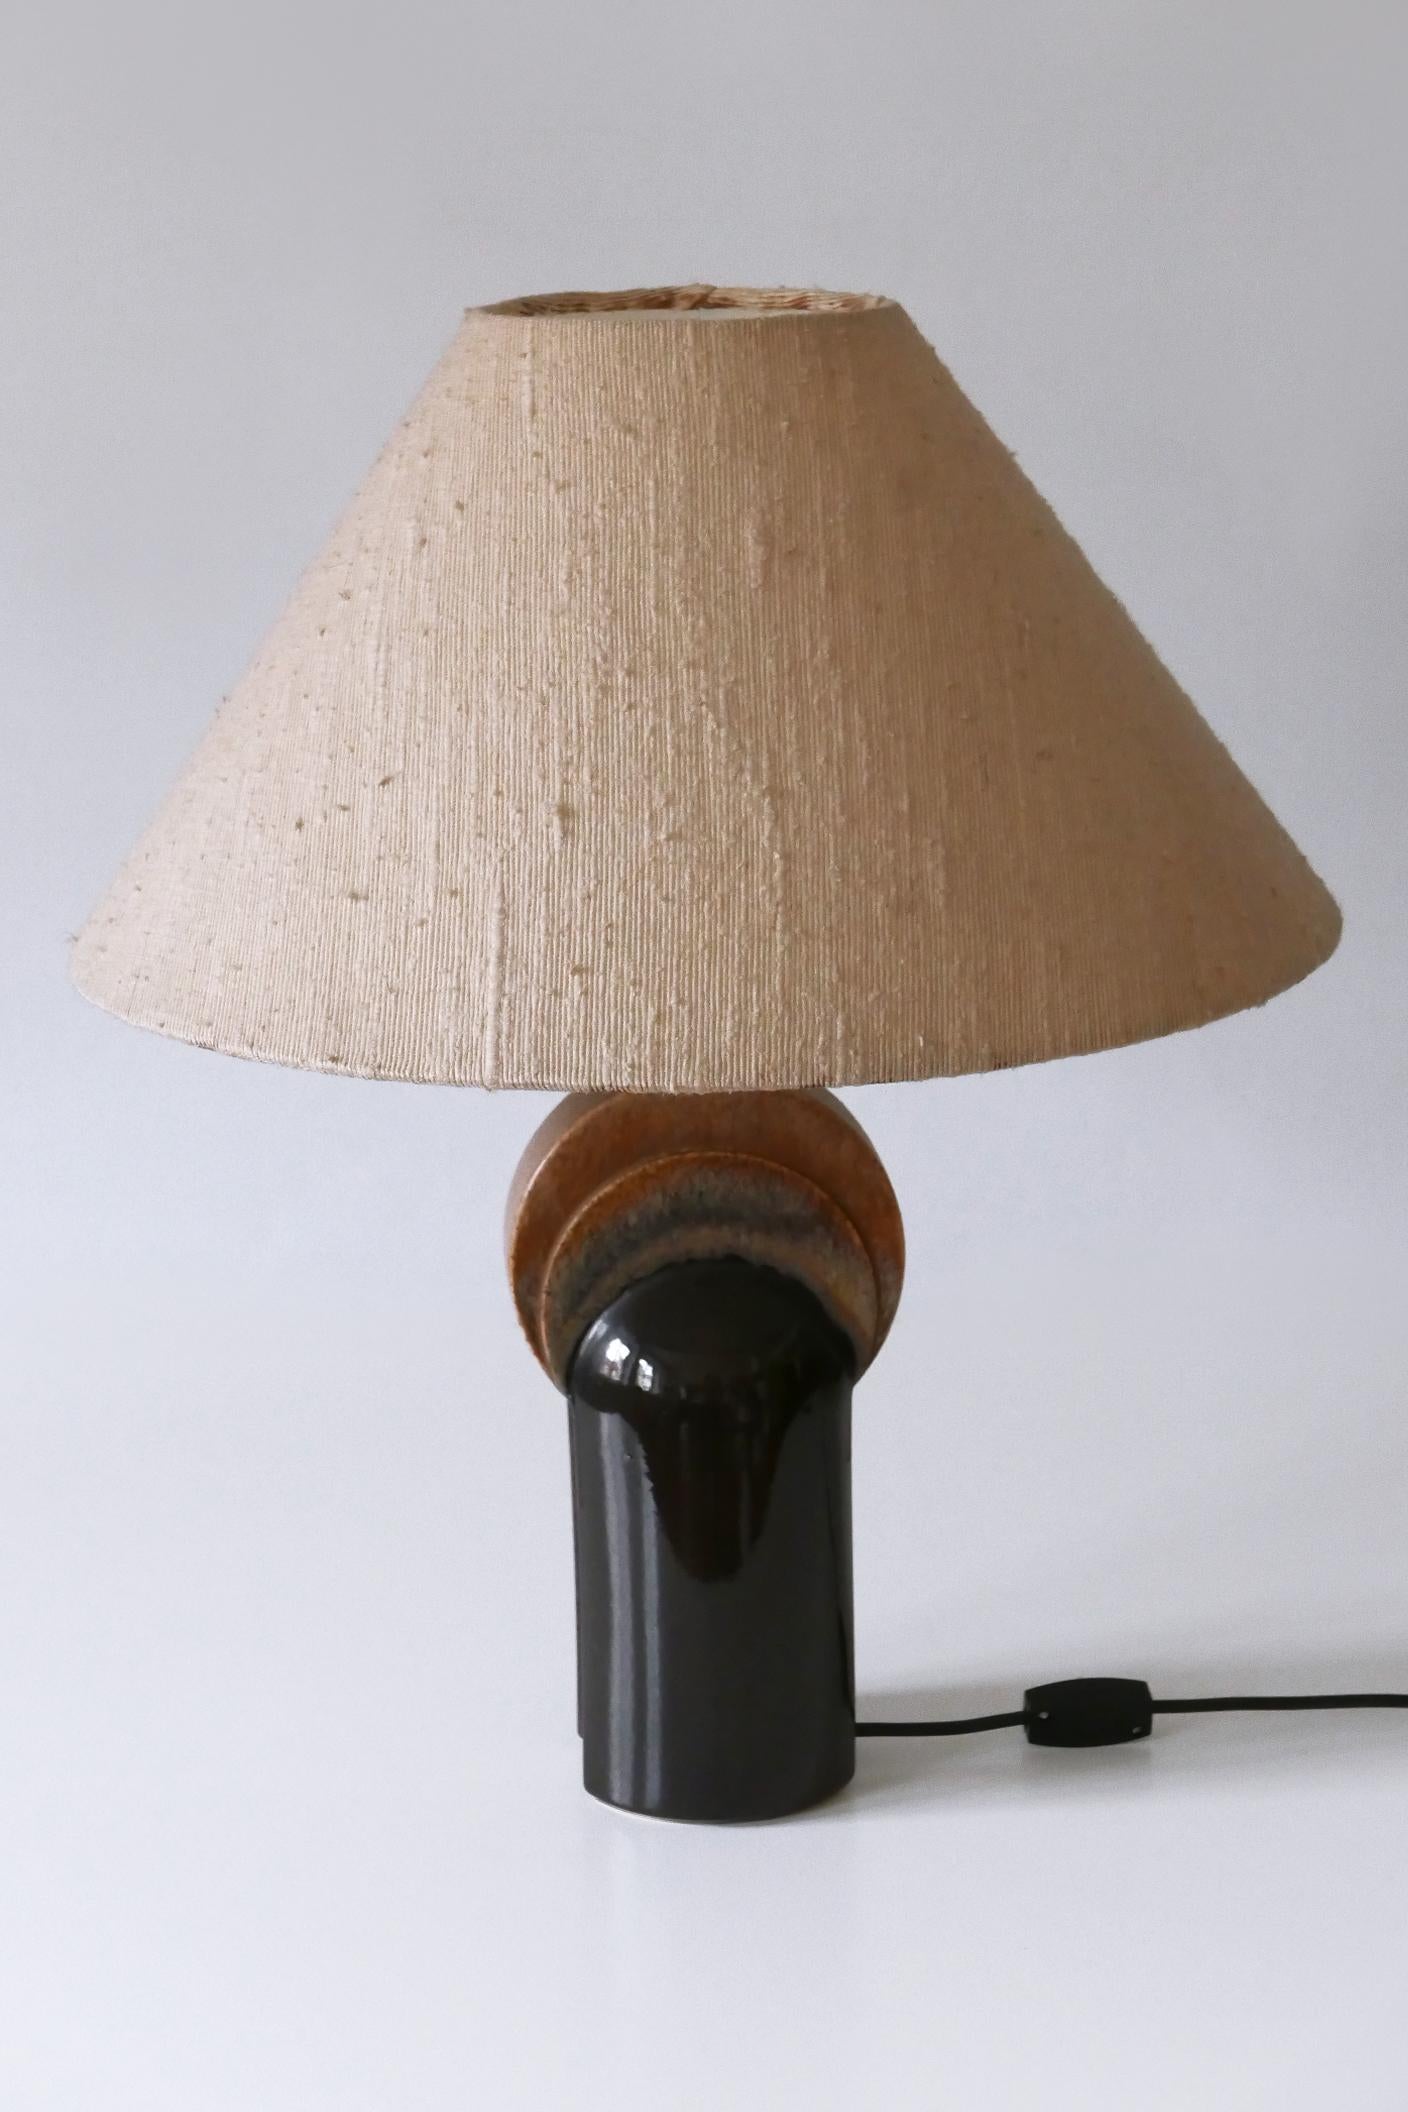 Mid-20th Century Elegant Mid-Century Modern Ceramic Table Lamp by Leola Design Germany 1960s For Sale